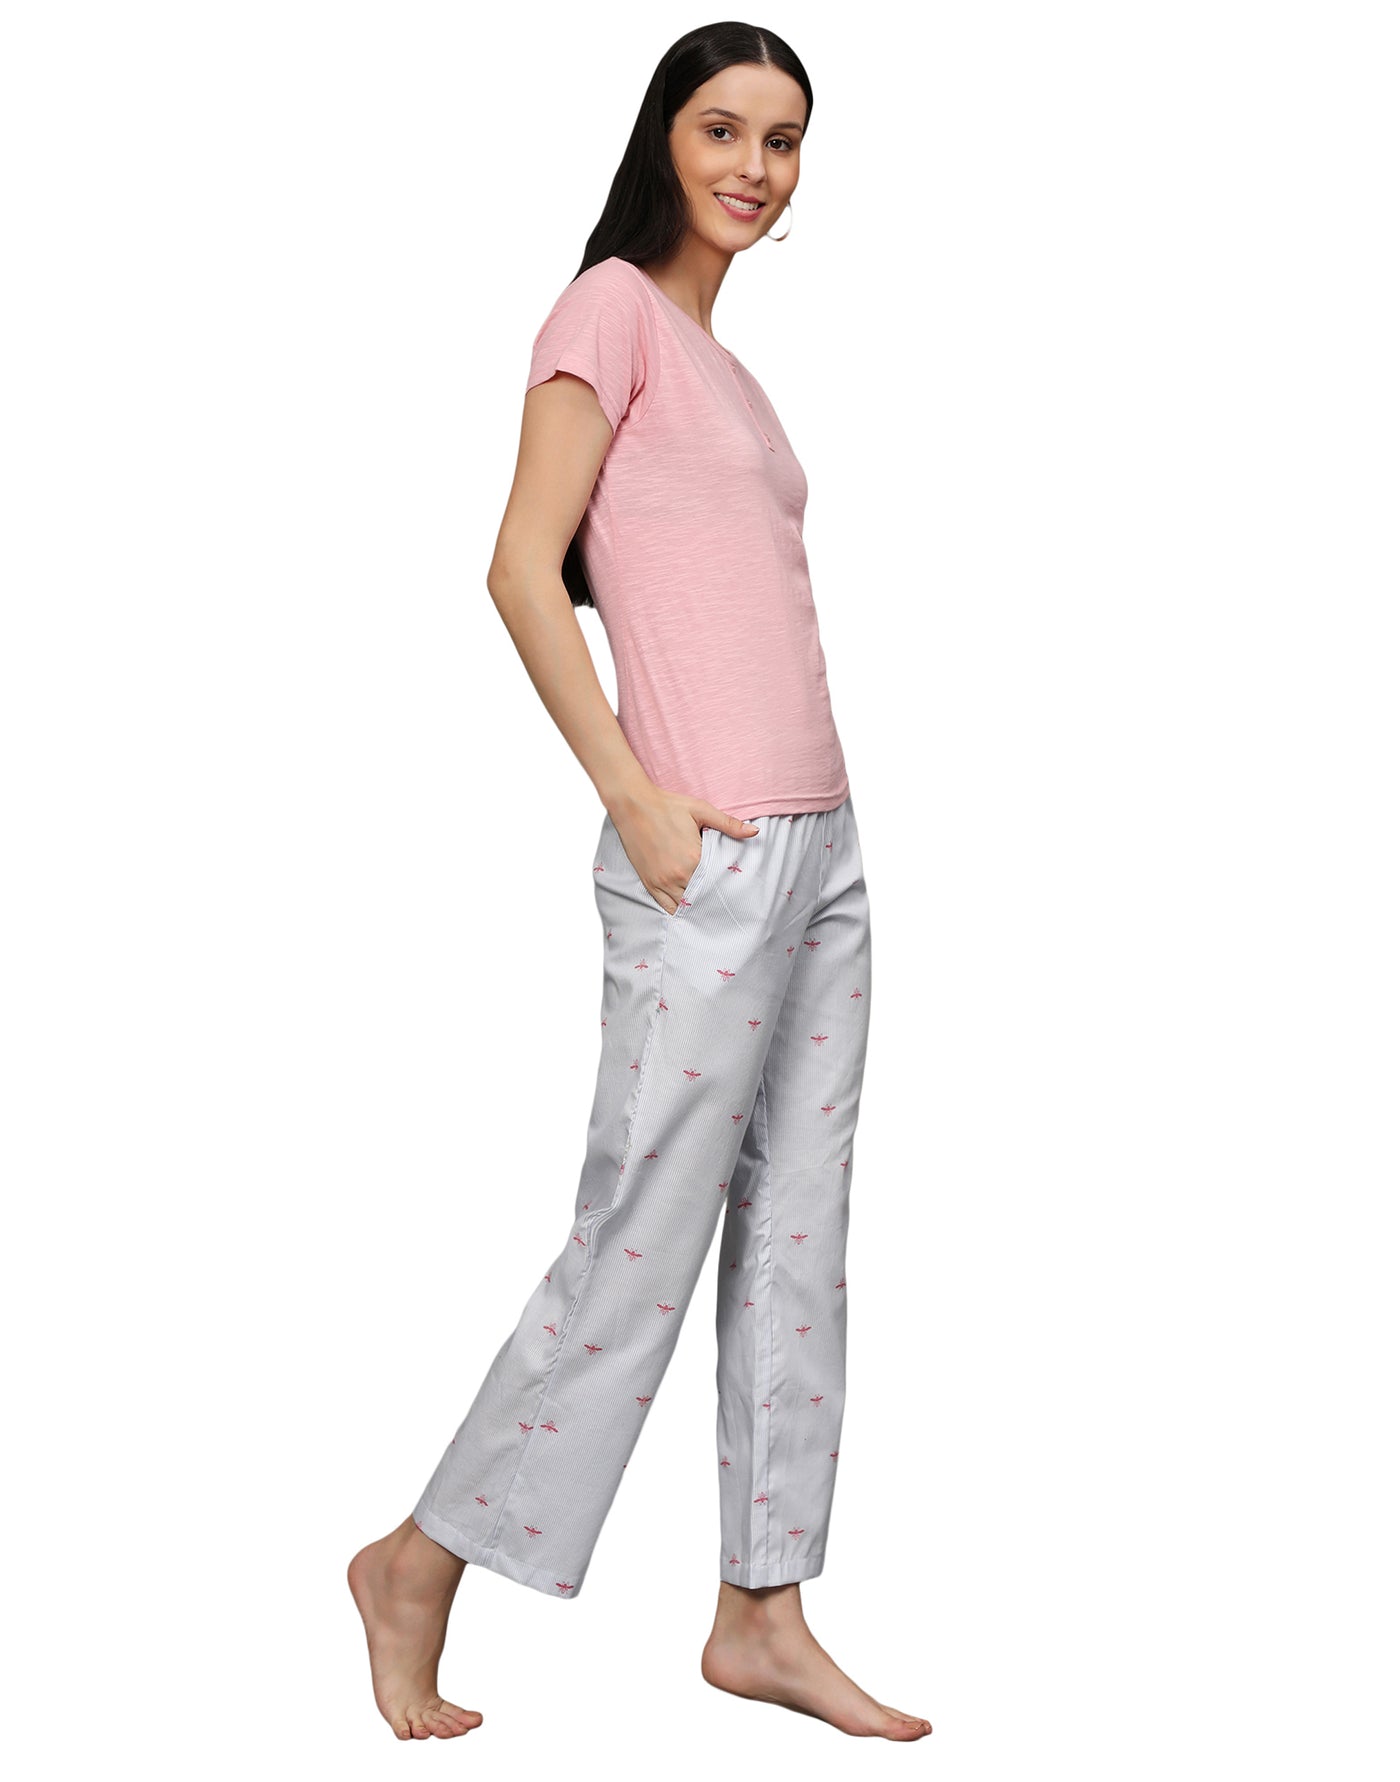 Pyjama Set for Women-Bee Print